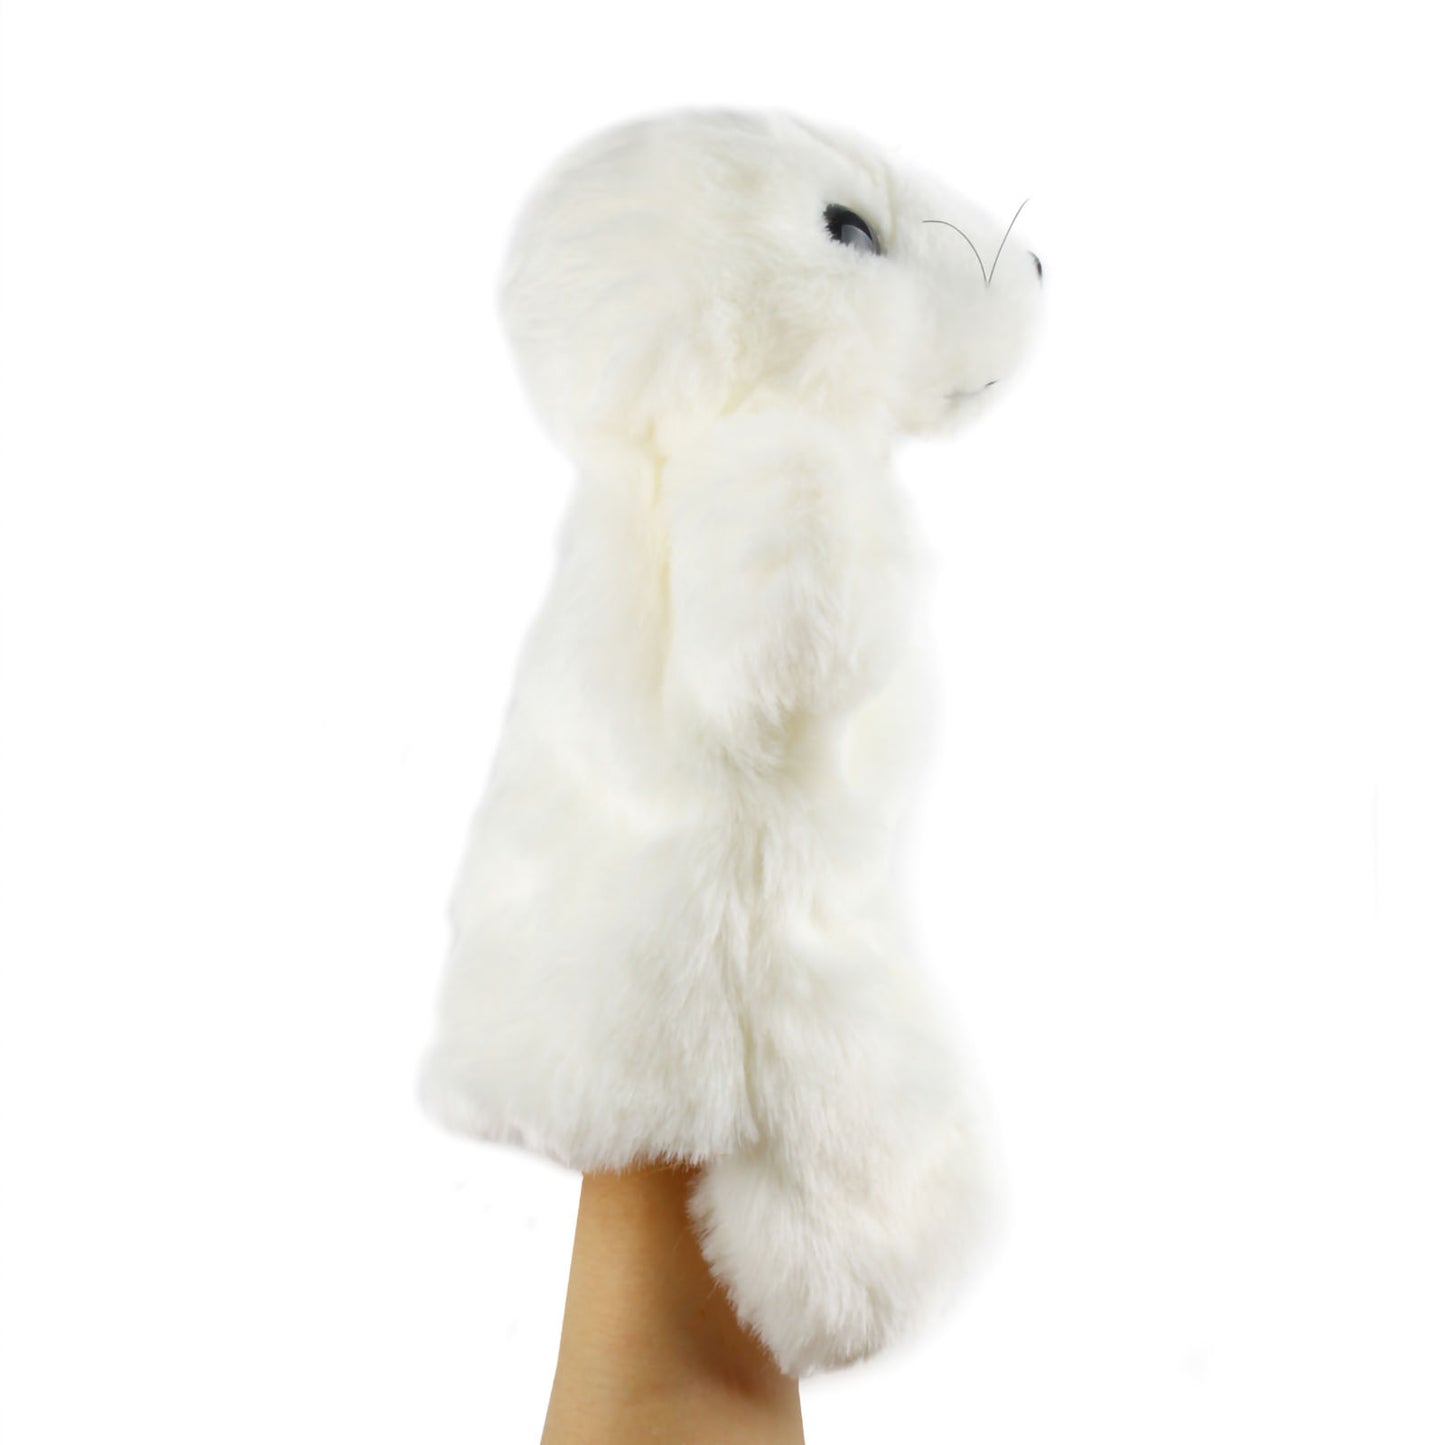 Andux Hand Puppet Soft Stuffed Animal Toy (SO-28 Sea Lion)